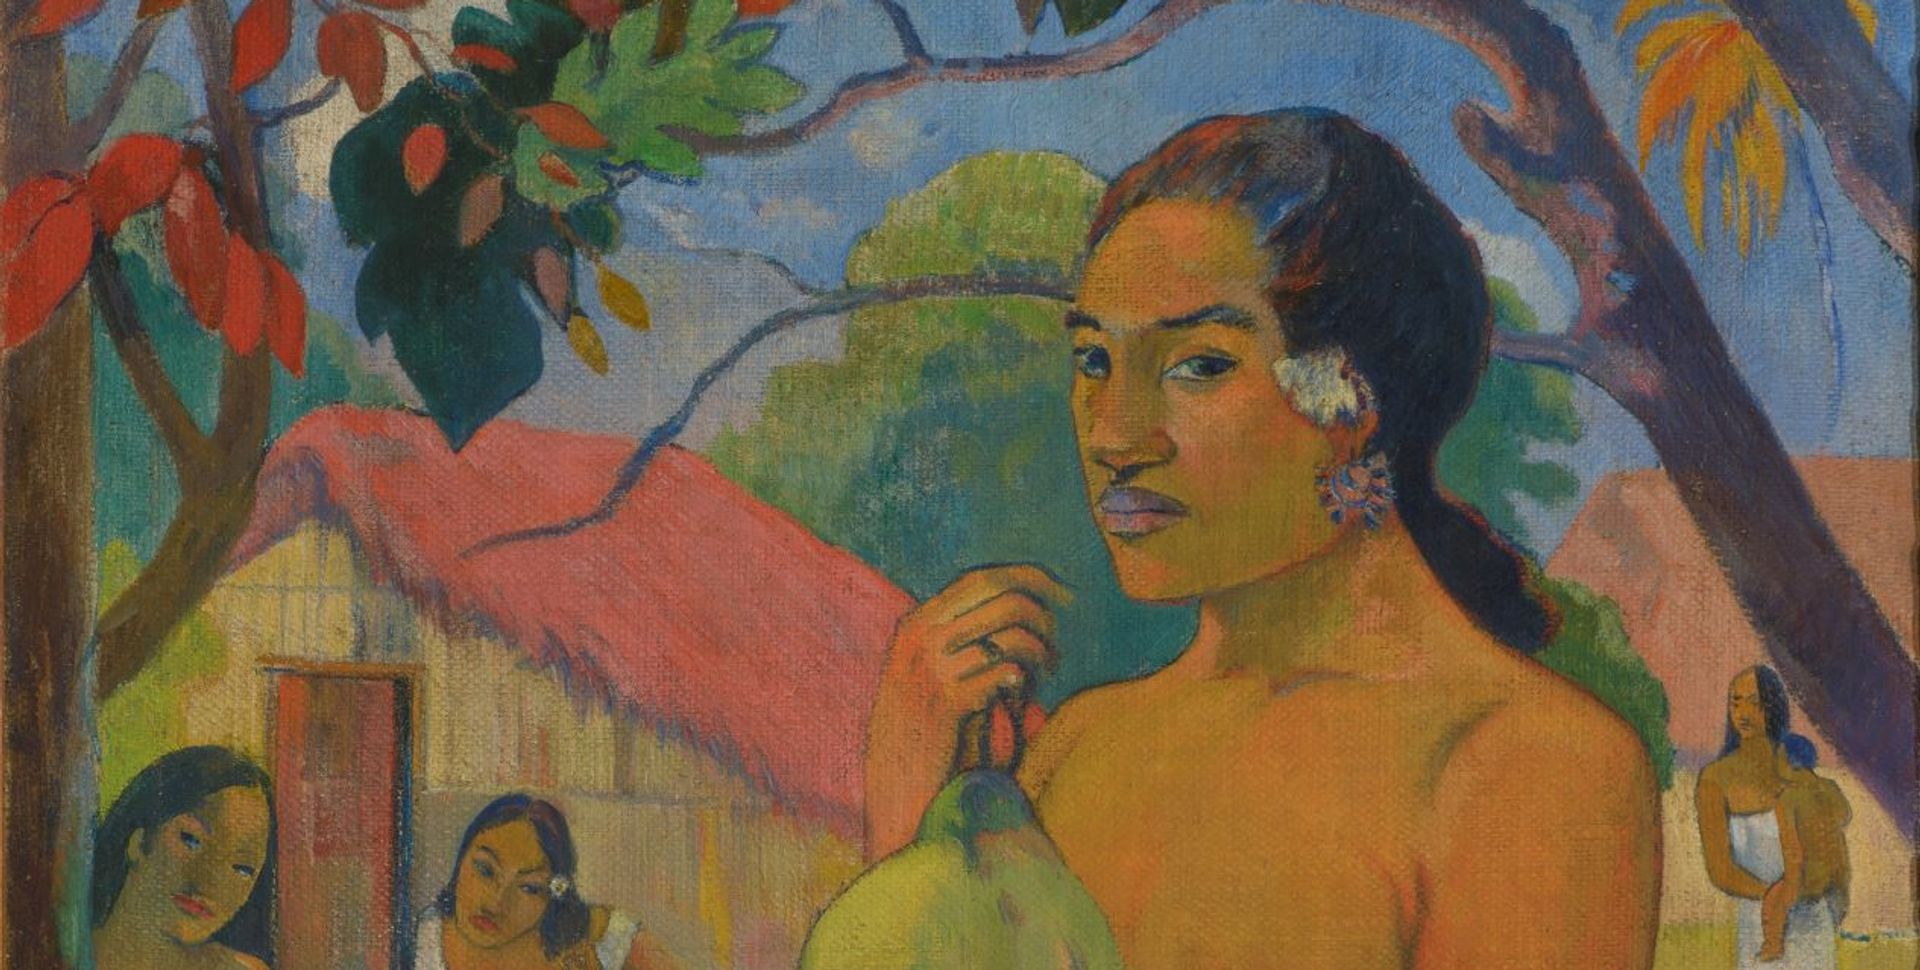 Paul Gauguin, La femme au fruit. Eu haere ia oe (Où vas-tu?), Tahiti, 1893, huile sur toile, 92,5×73,5 cm, Musée de l’Ermitage, Saint-Pétersbourg. © Musée de l’Ermitage, Saint-Pétersbourg